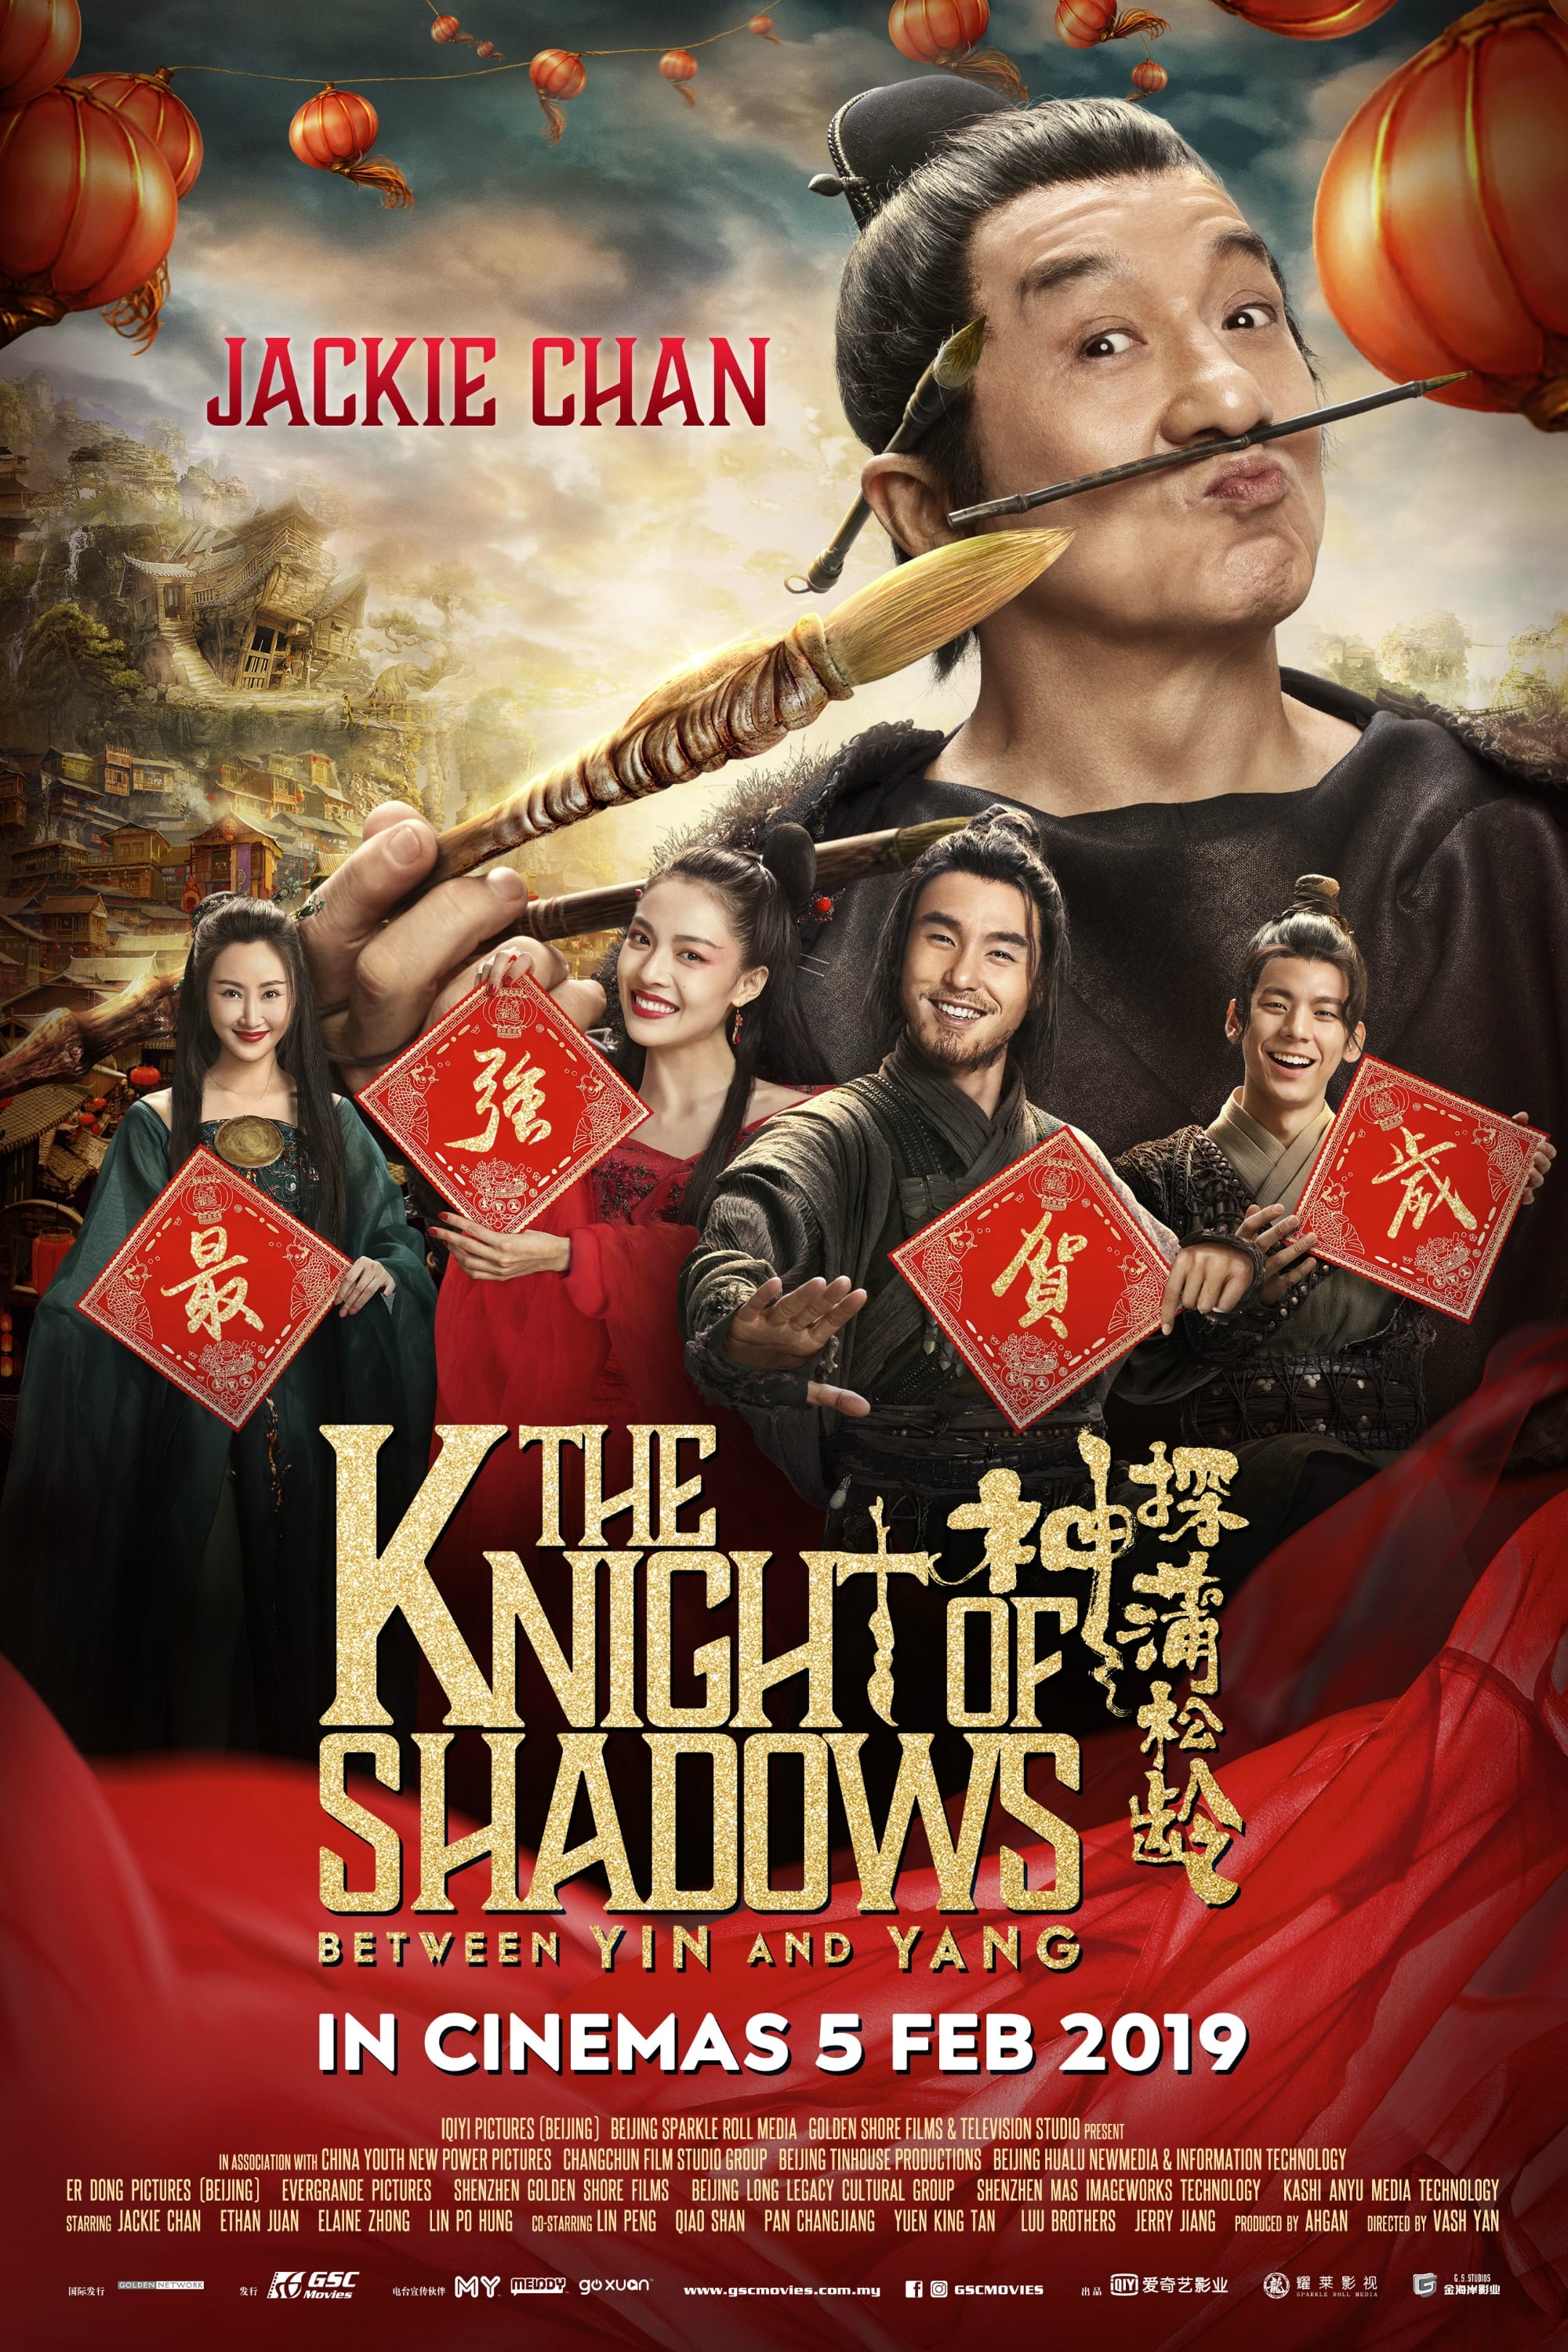 EN - The Knight Of Shadows Between Yin And Yang (2019) JACKIE CHAN (ENG)